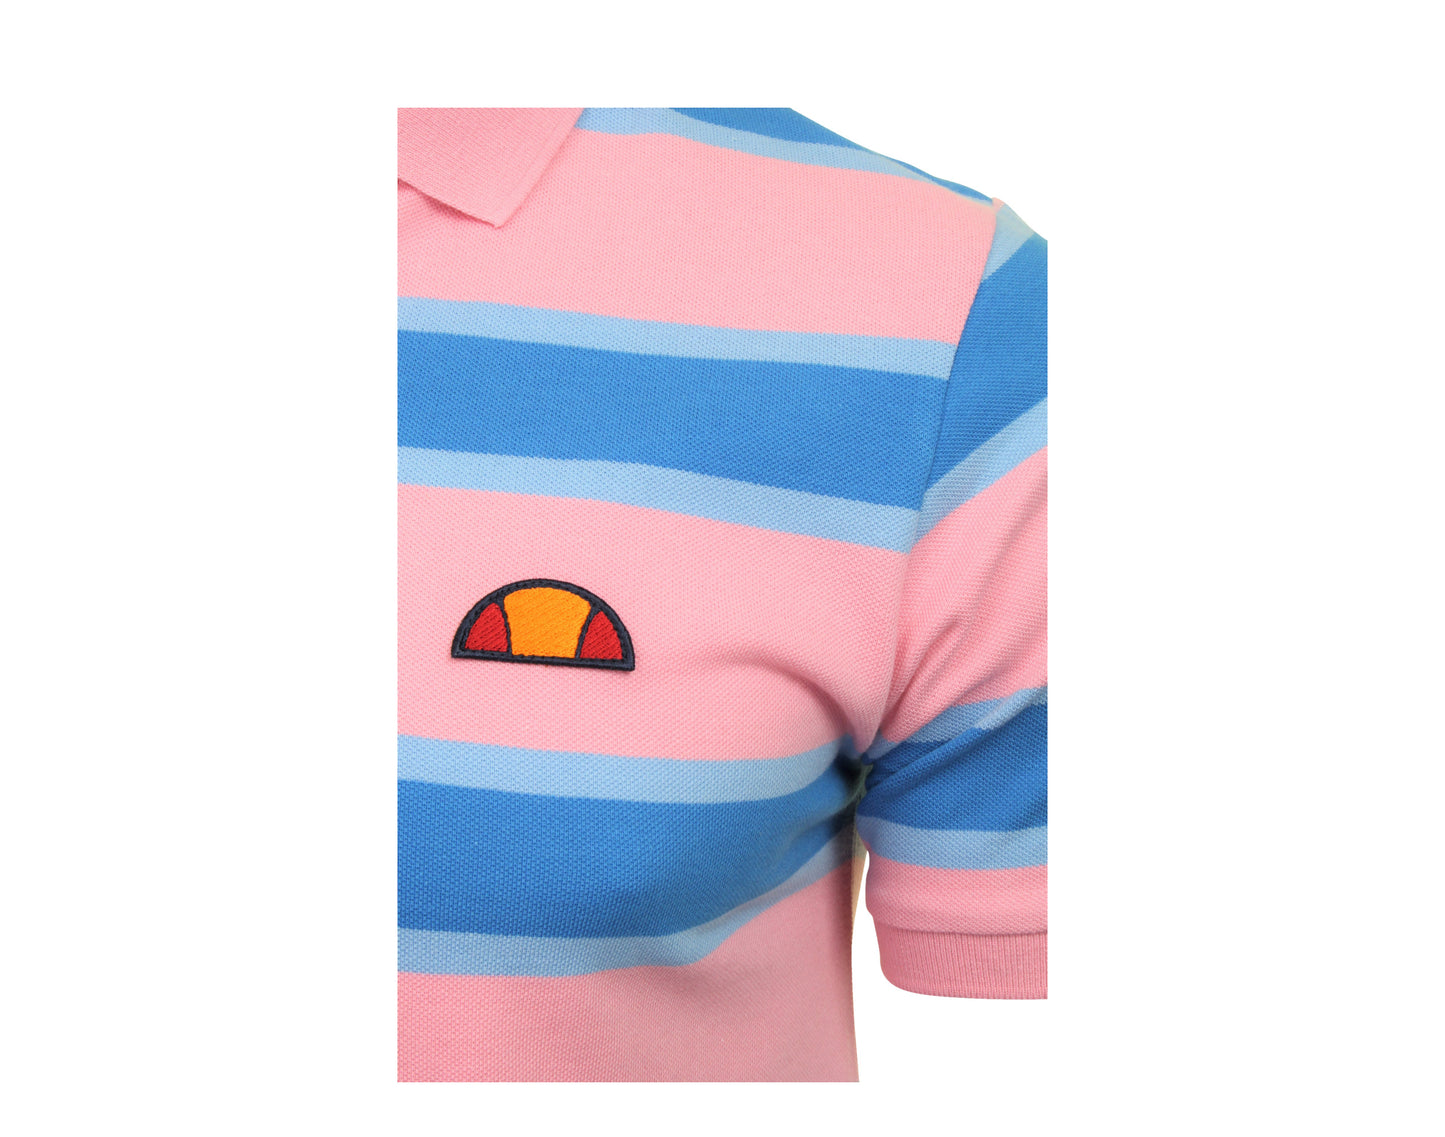 Ellesse Marono Stripped Pique Polo Light Pink/Blue Men's Shirt SHA06338-670